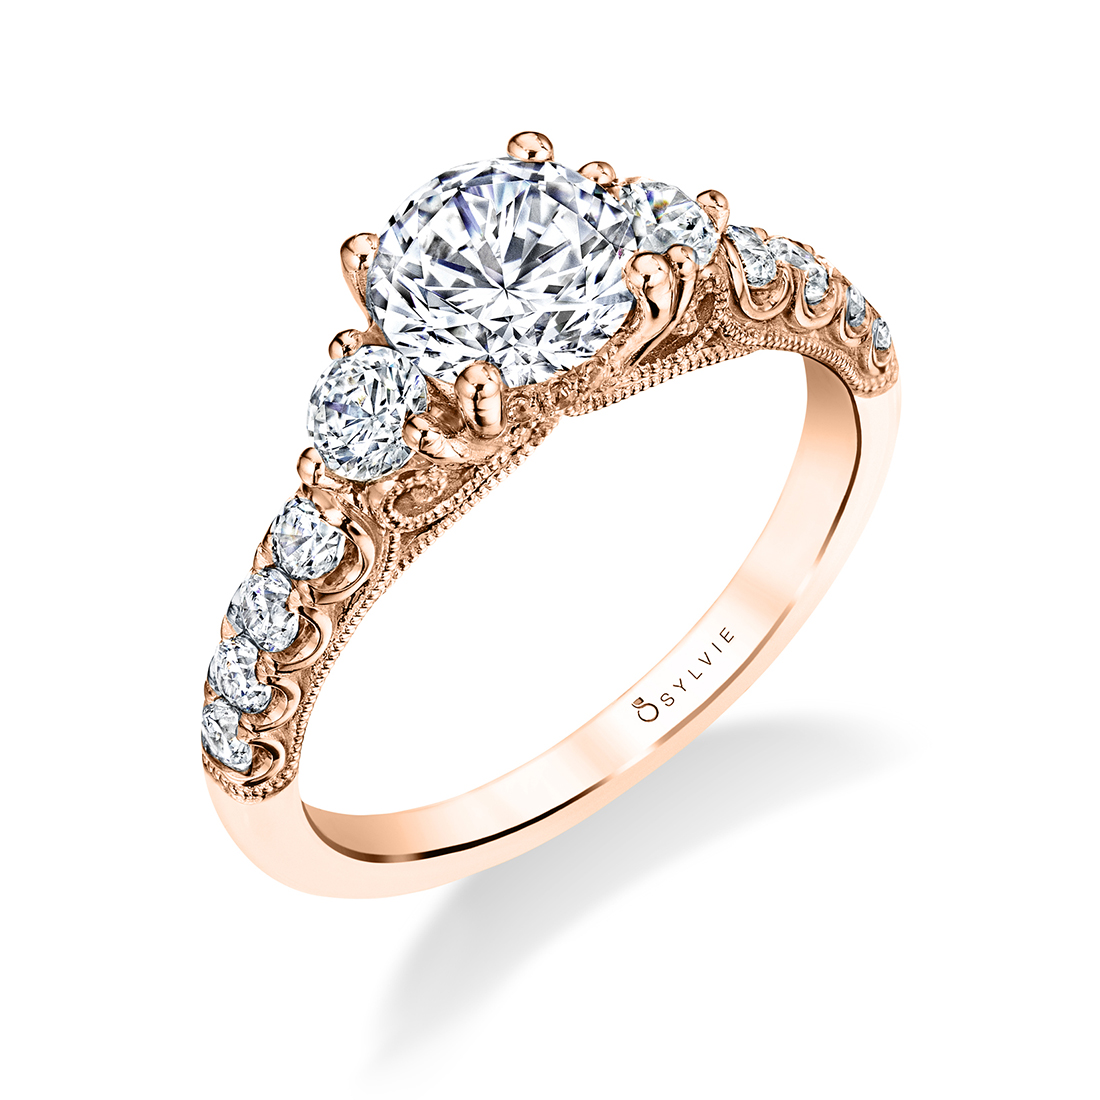 Three stone engagement ring with round diamonds in rose gold - Lara